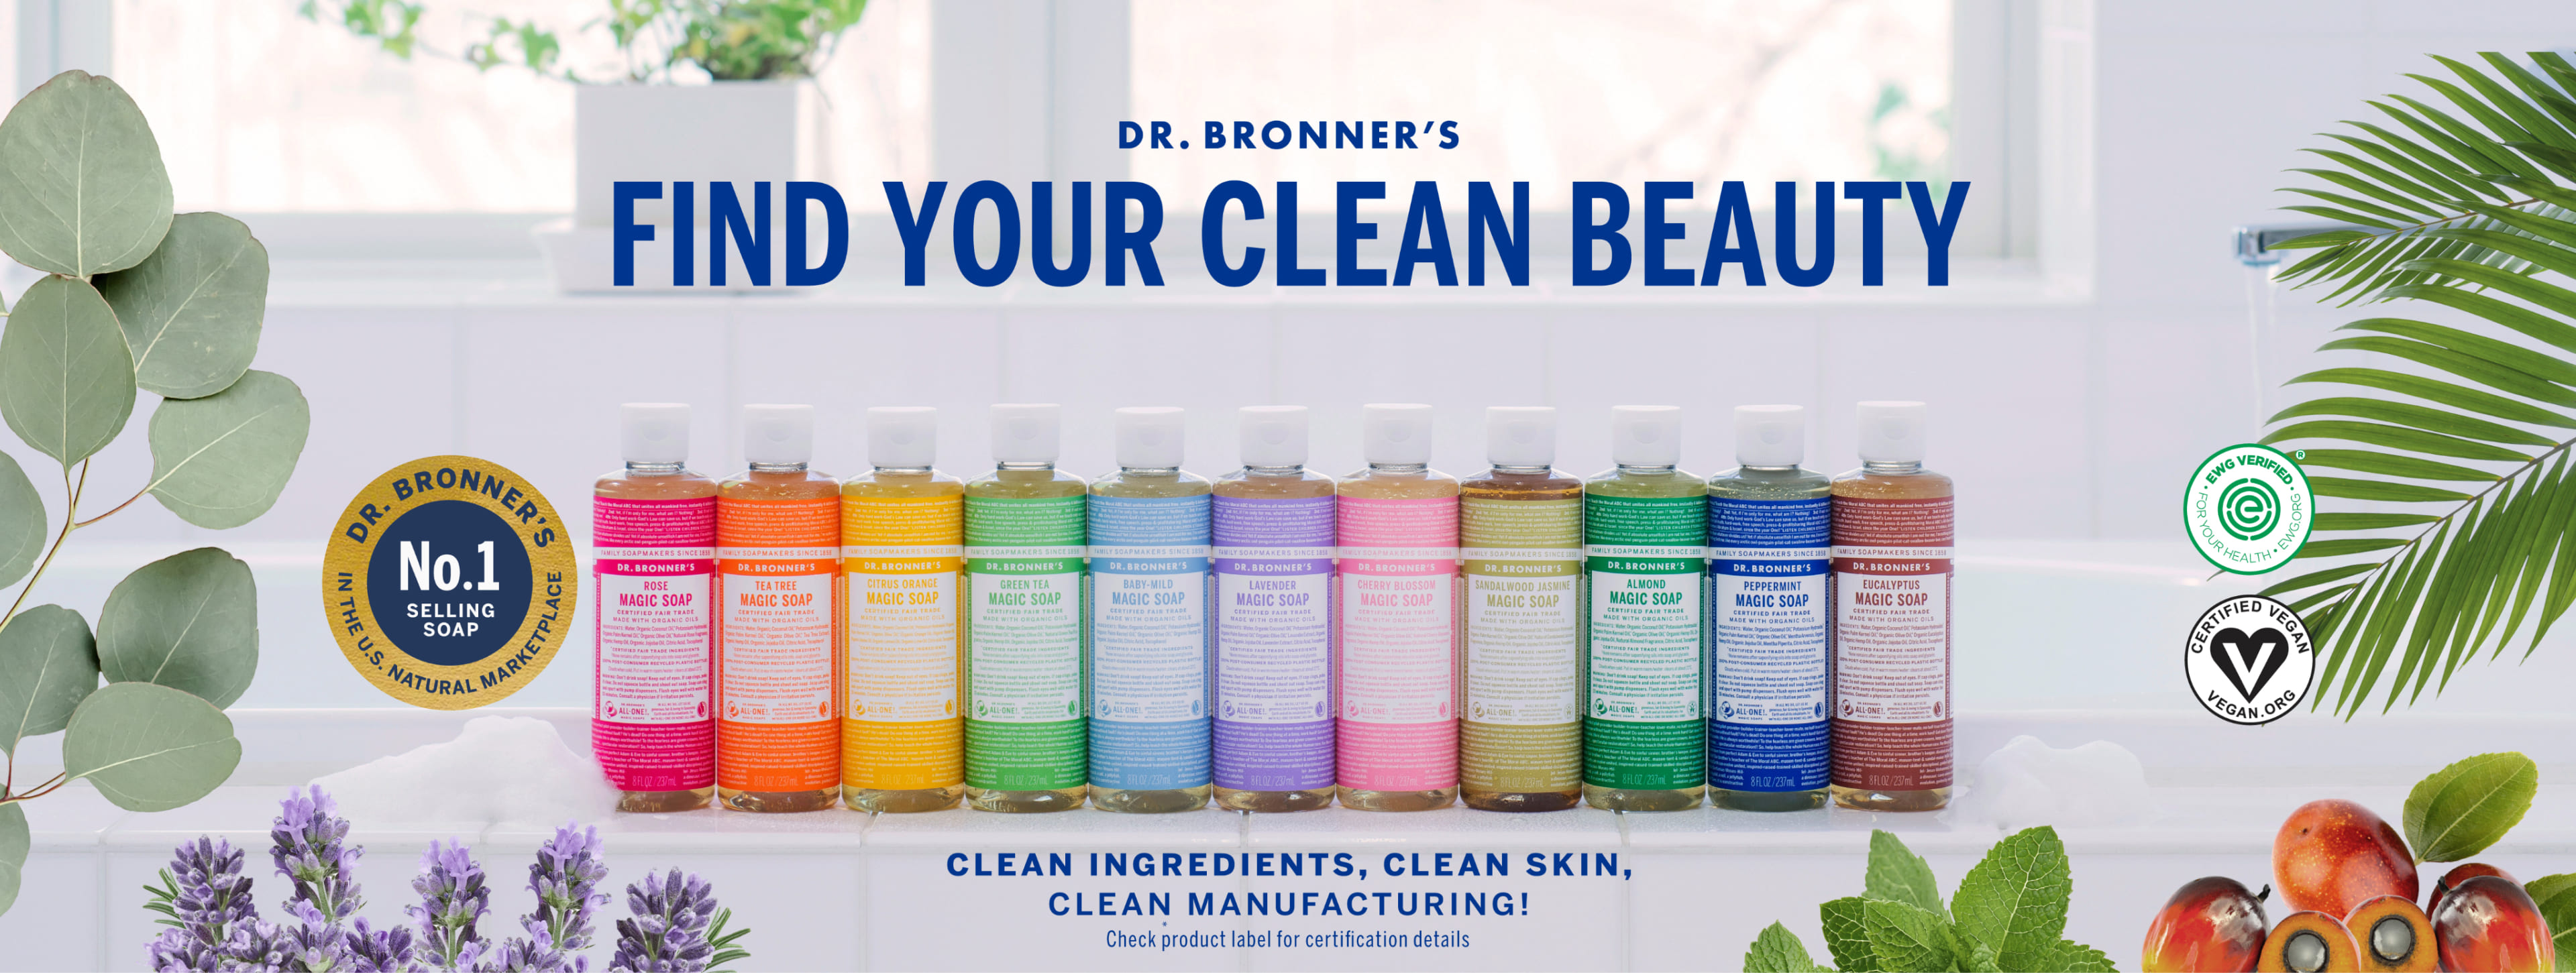 FIND YOUR CLEAN BEAUTY -クリーンビューティー- │ マジックソープ ドクターブロナー日本公式サイト